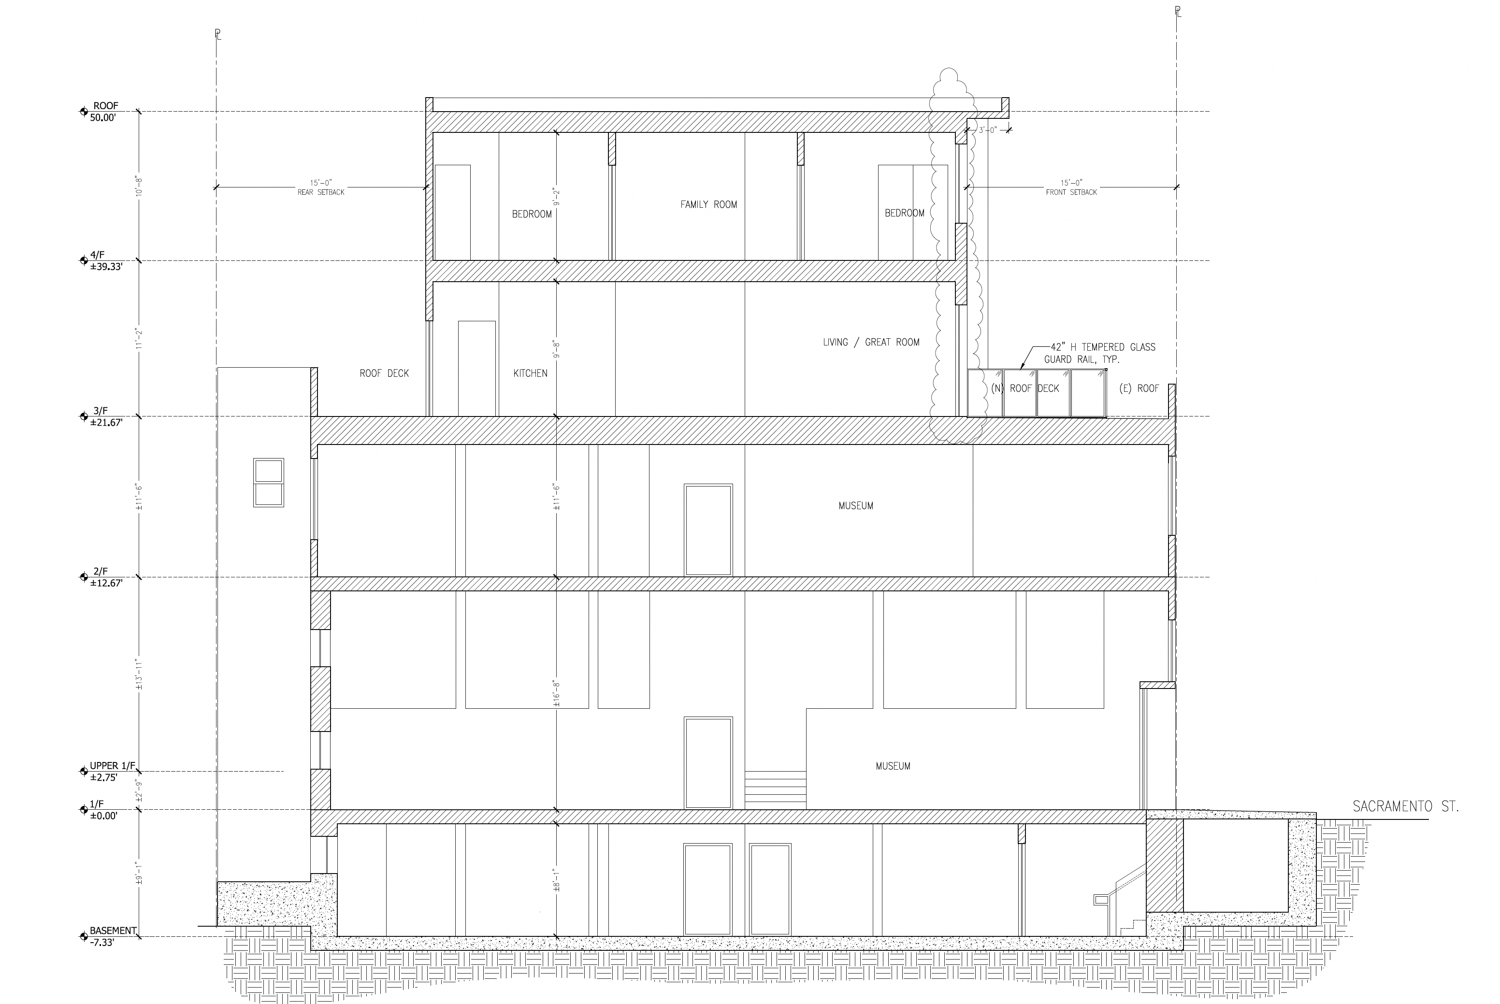 809 Sacramento Street vertical elevation, illustration by Nie Yang Architects